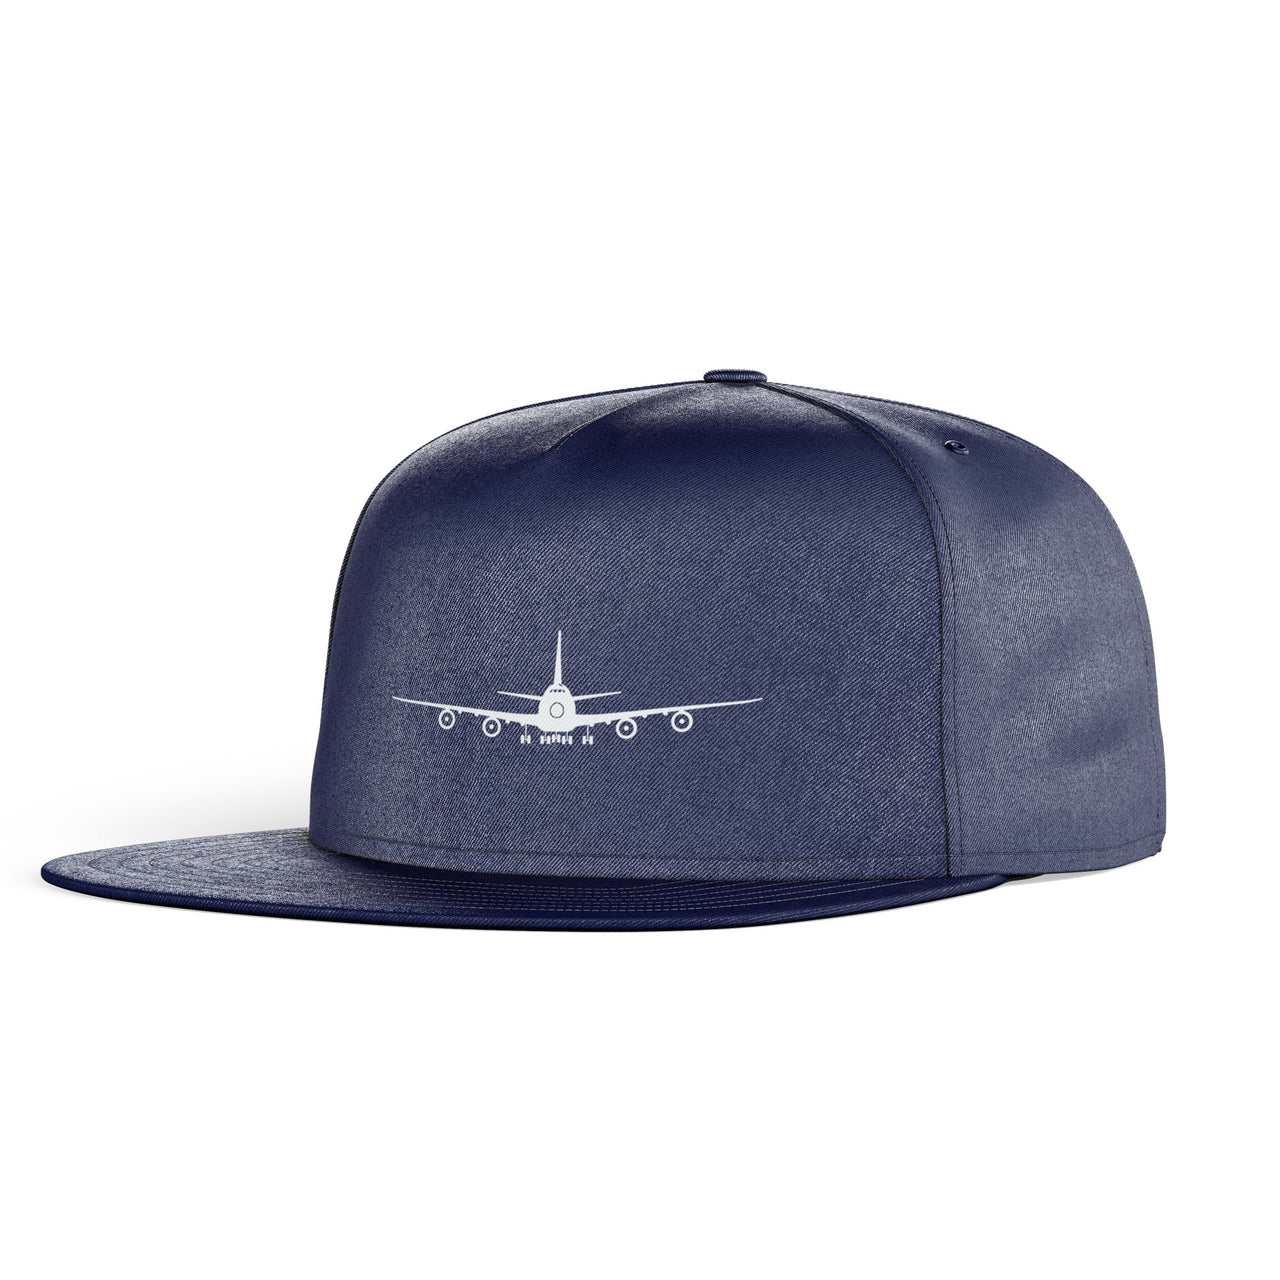 Boeing 747 Silhouette Designed Snapback Caps & Hats